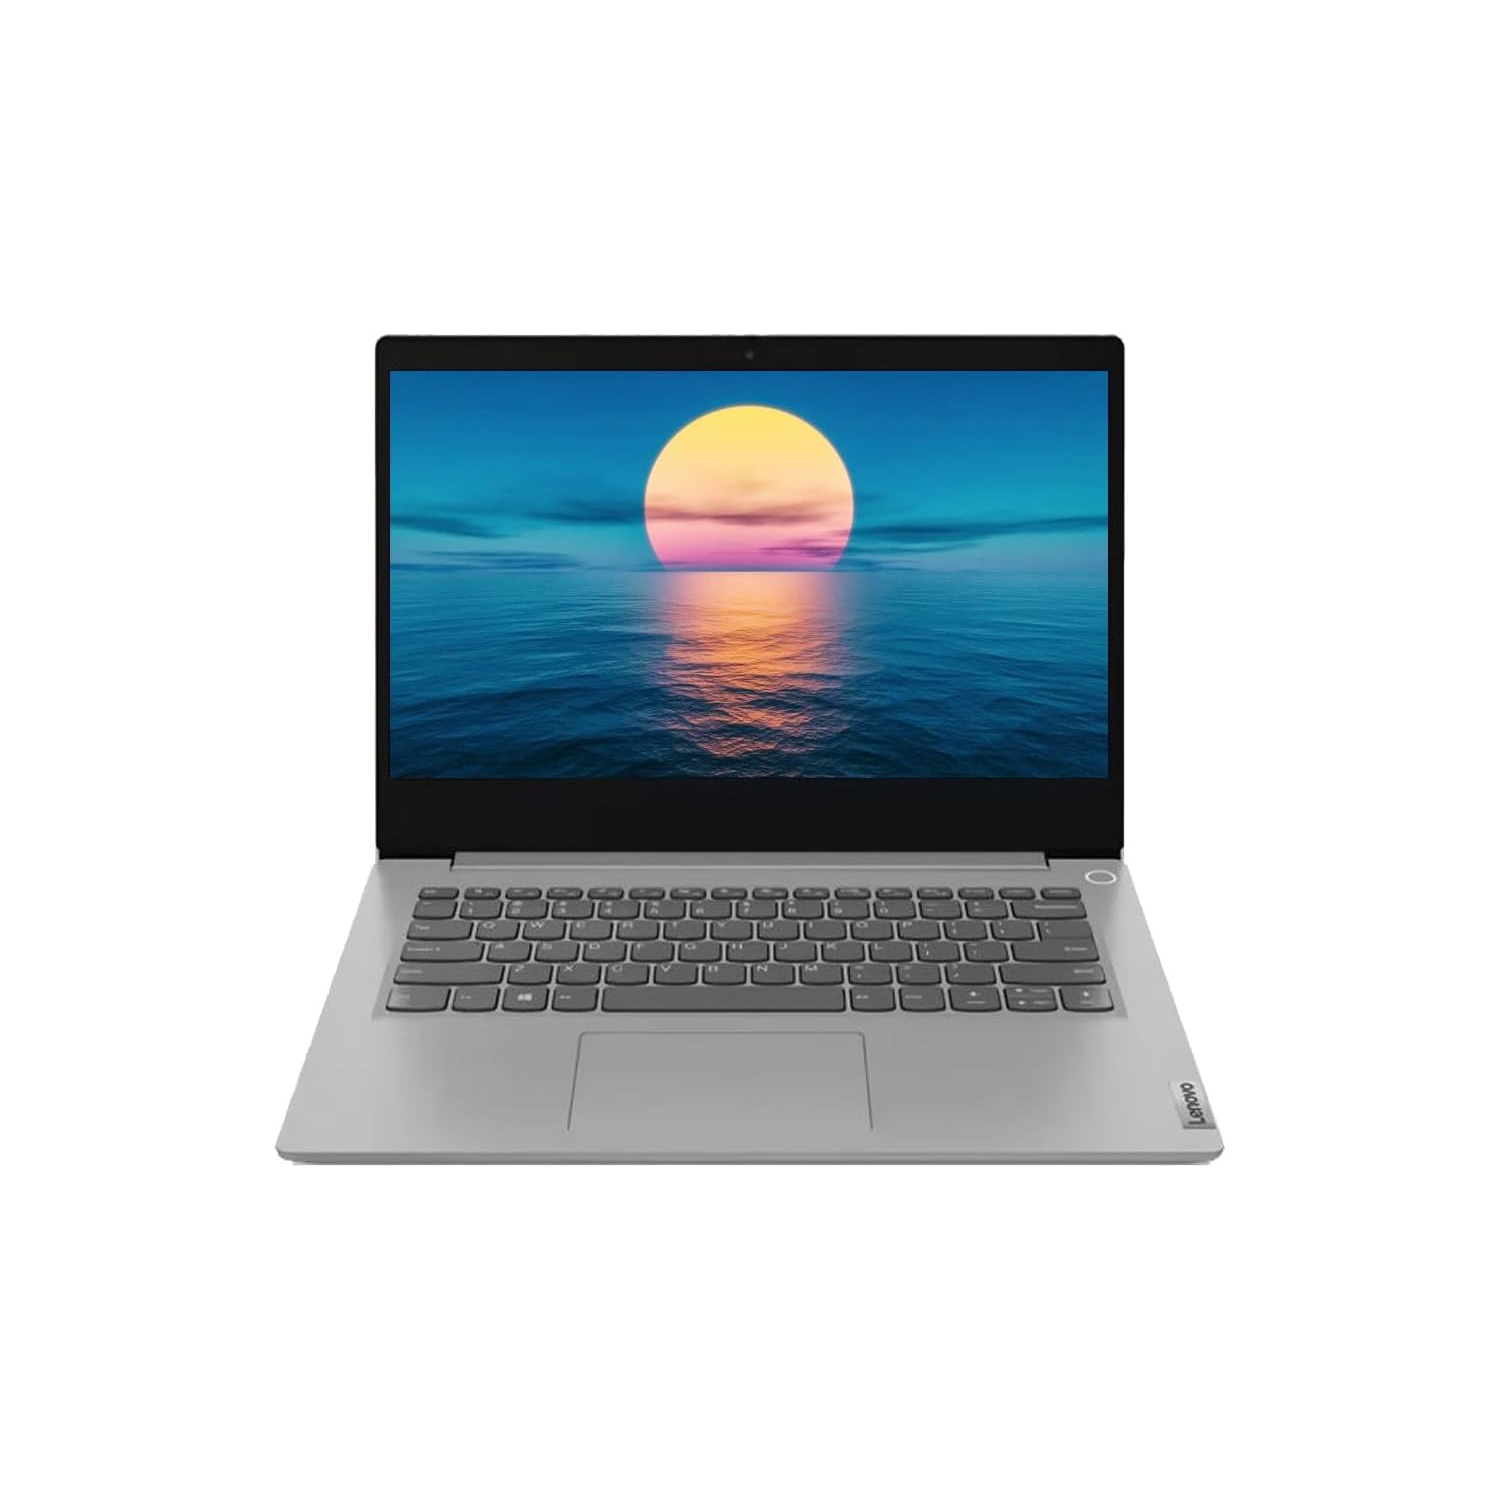 Lenovo Ideapad 3 14" FHD Laptop (Intel Core i5-1135G7, 8GB RAM, 512GB SSD, Windows 11) - Platinum Grey (81X700FXUS)